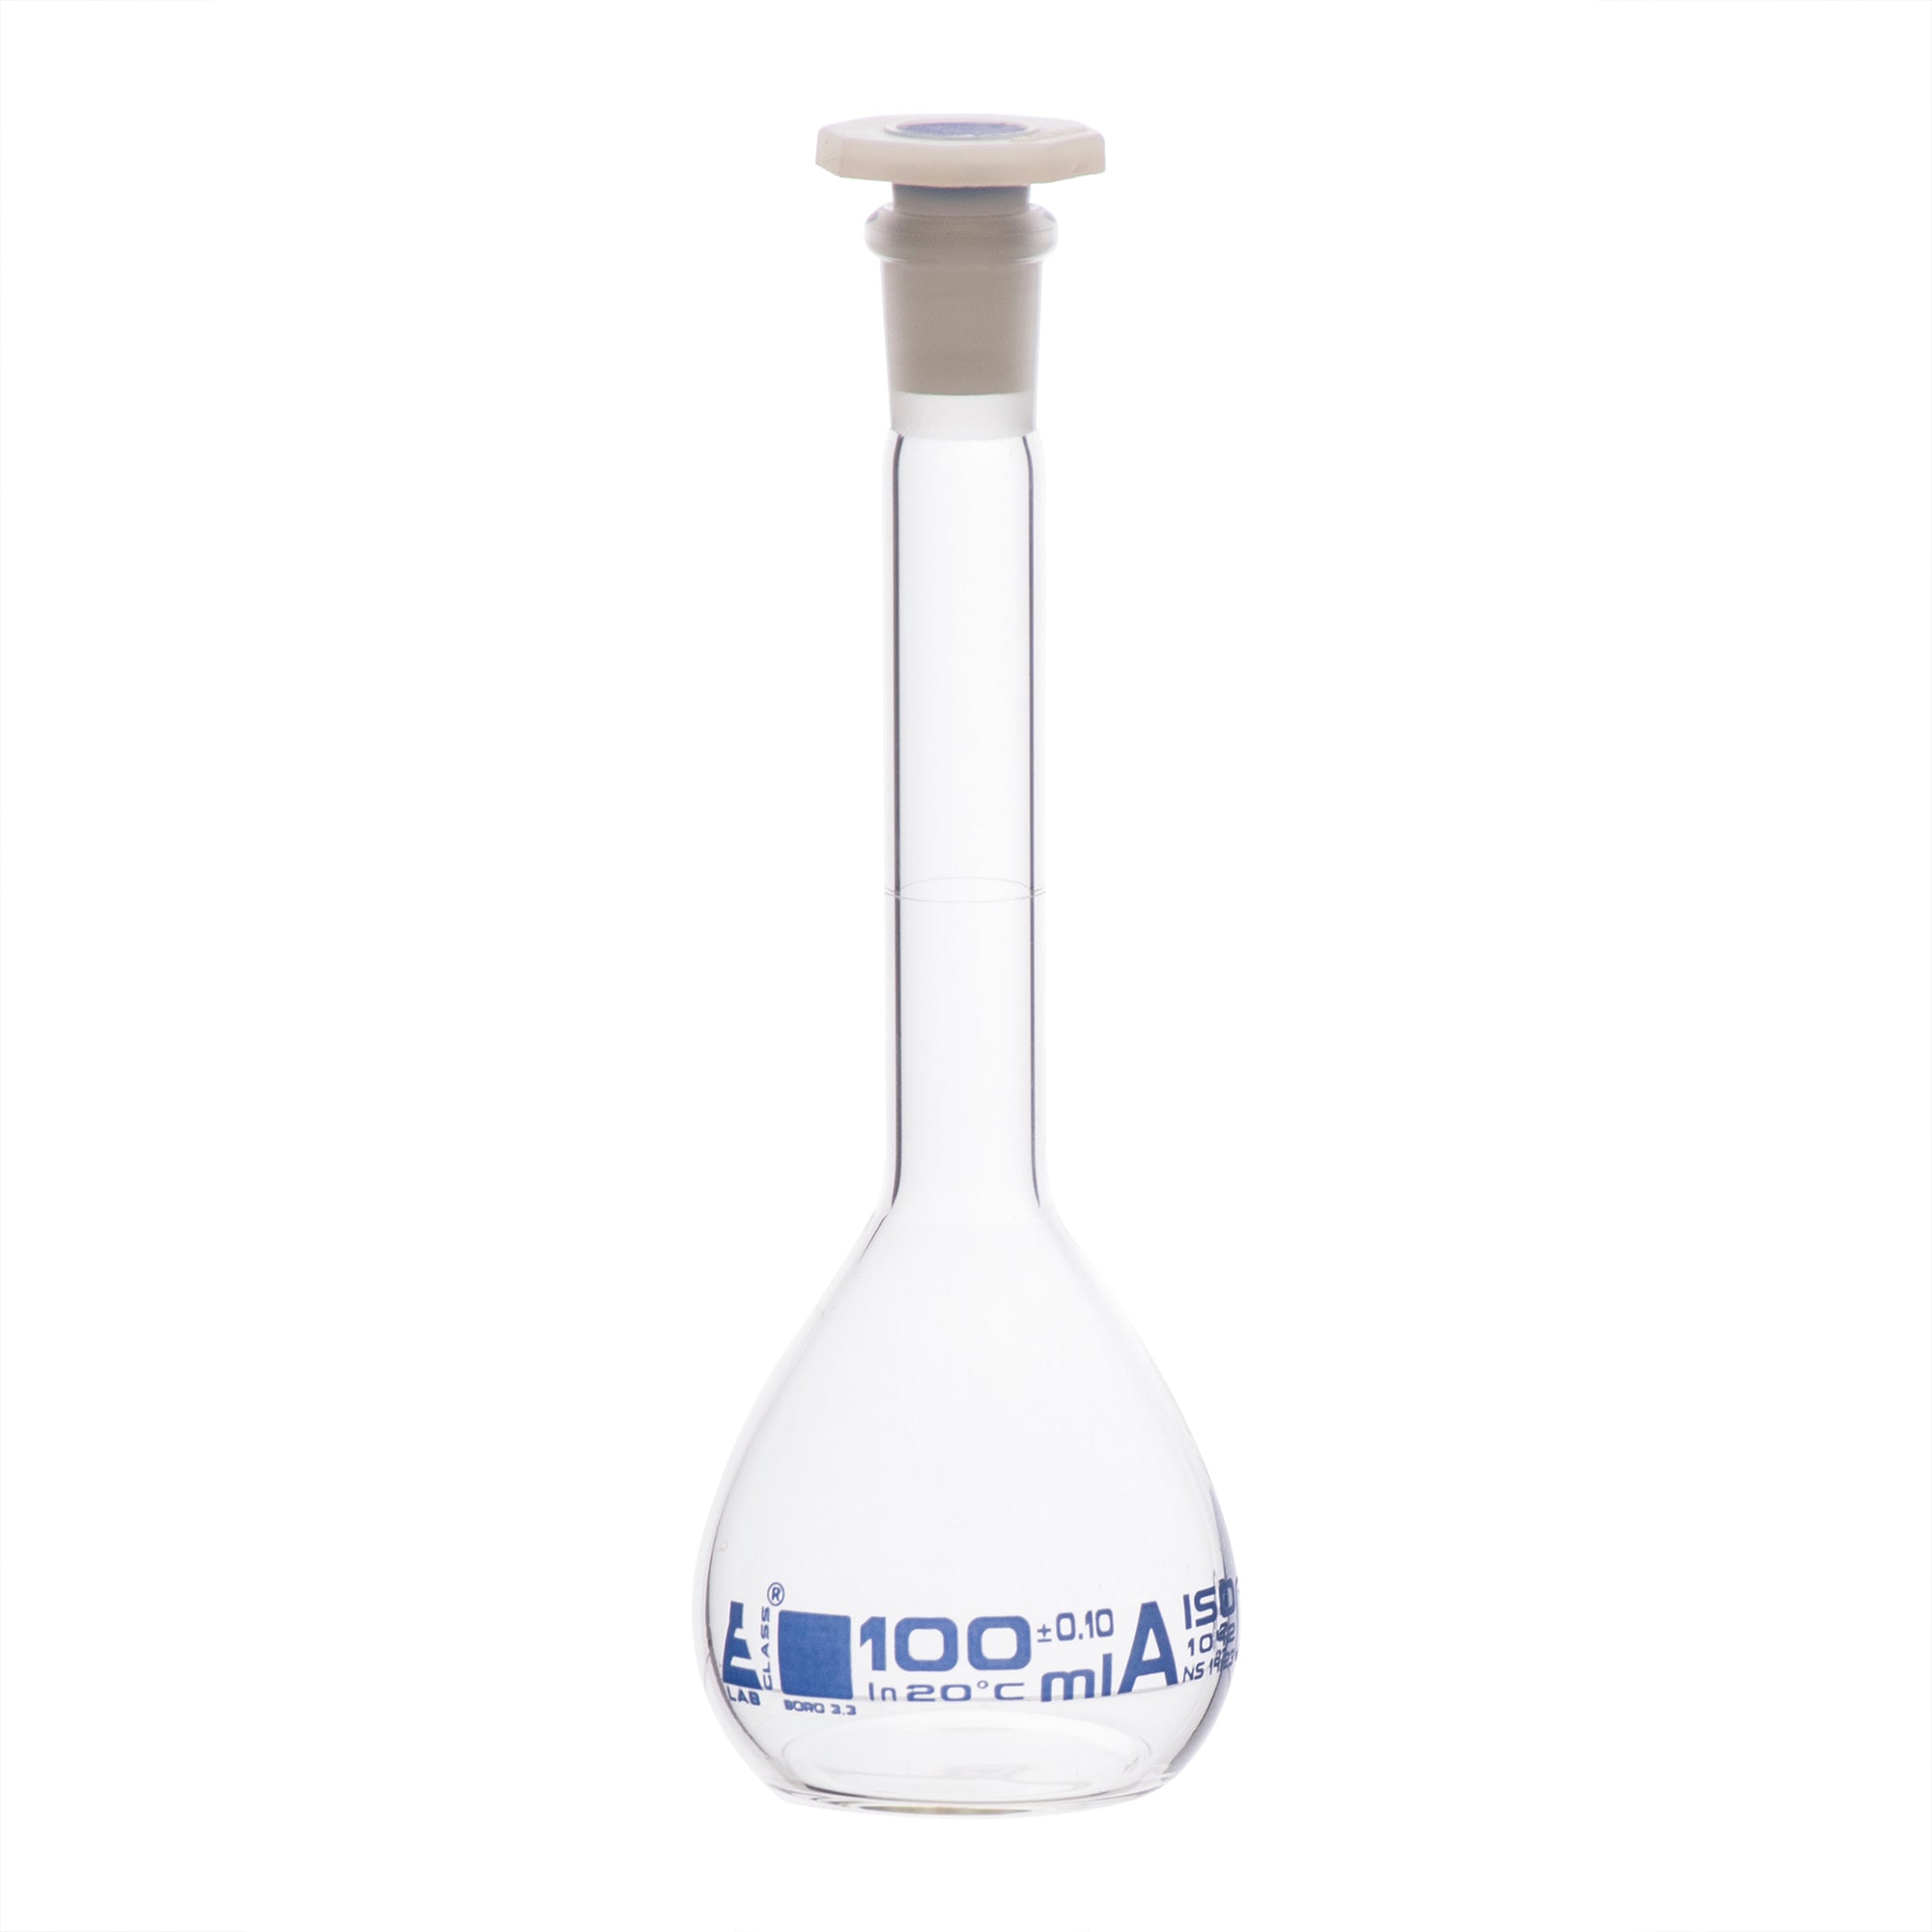 Borosilicate Glass Volumetric Flask with Polyethylene Stopper, 100ml, Class A, Blue Print, Autoclavable